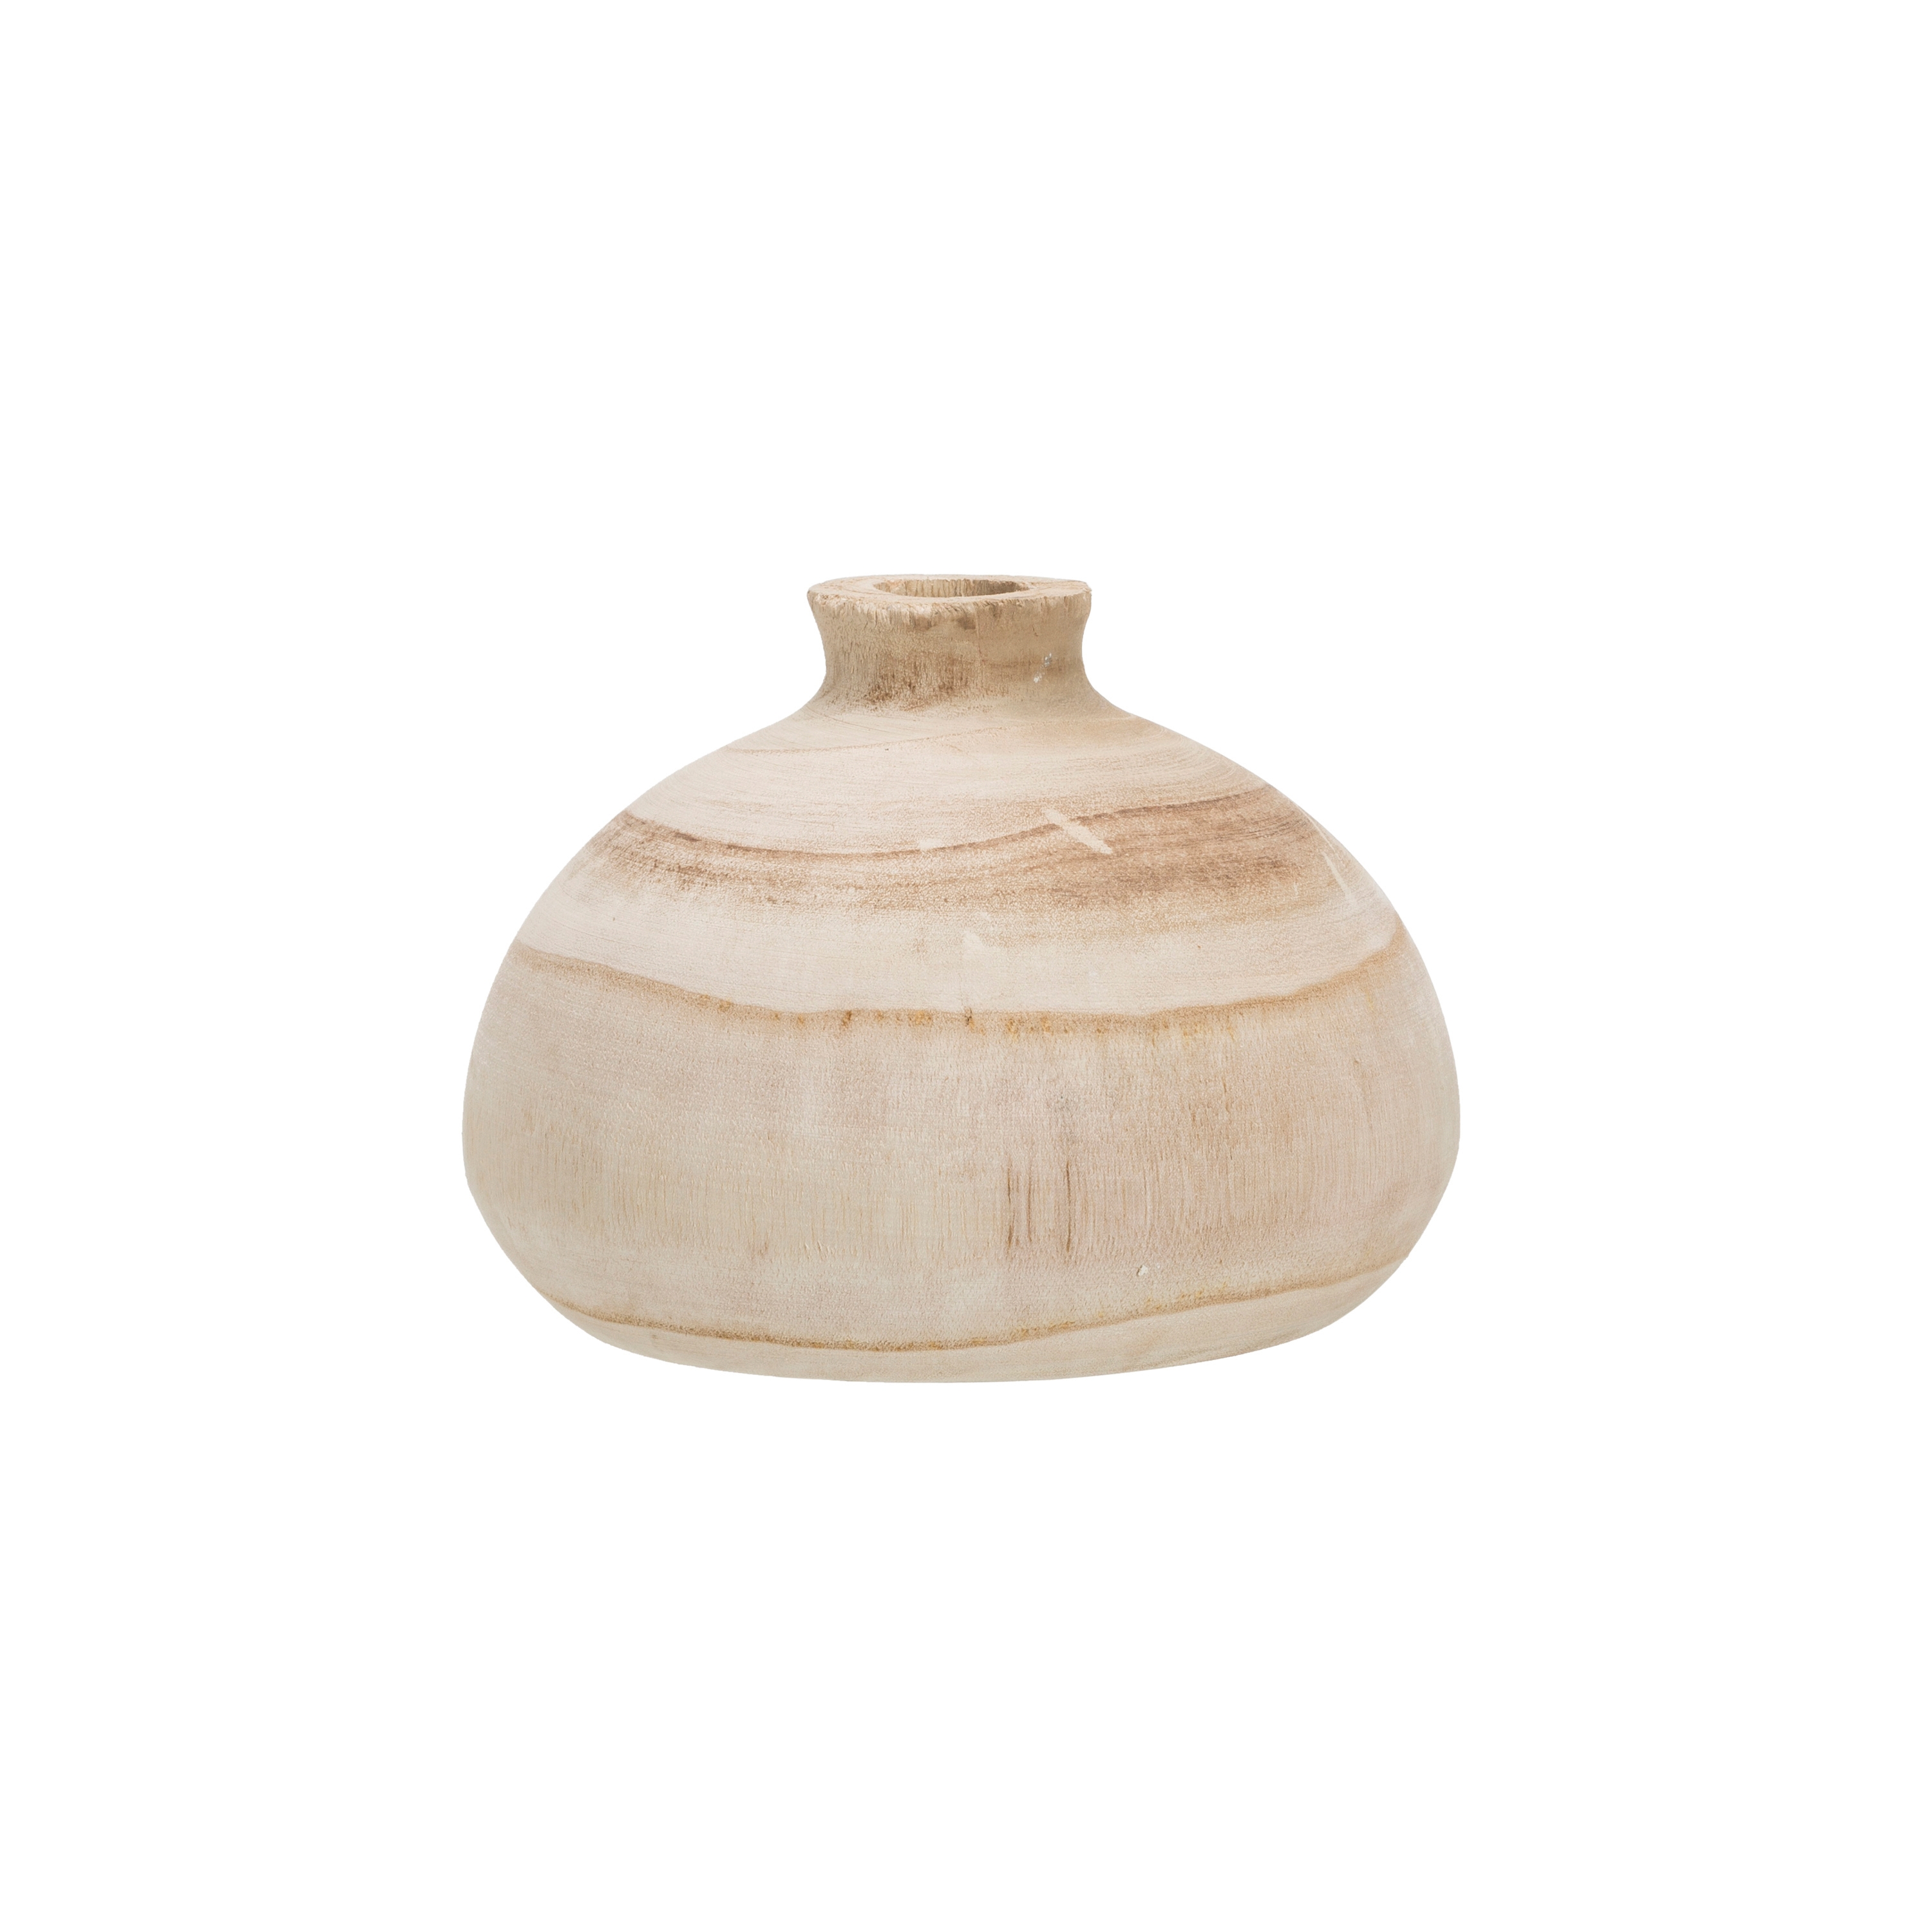 Small Paulownia Wood Vase (Each one will vary) - Image 0